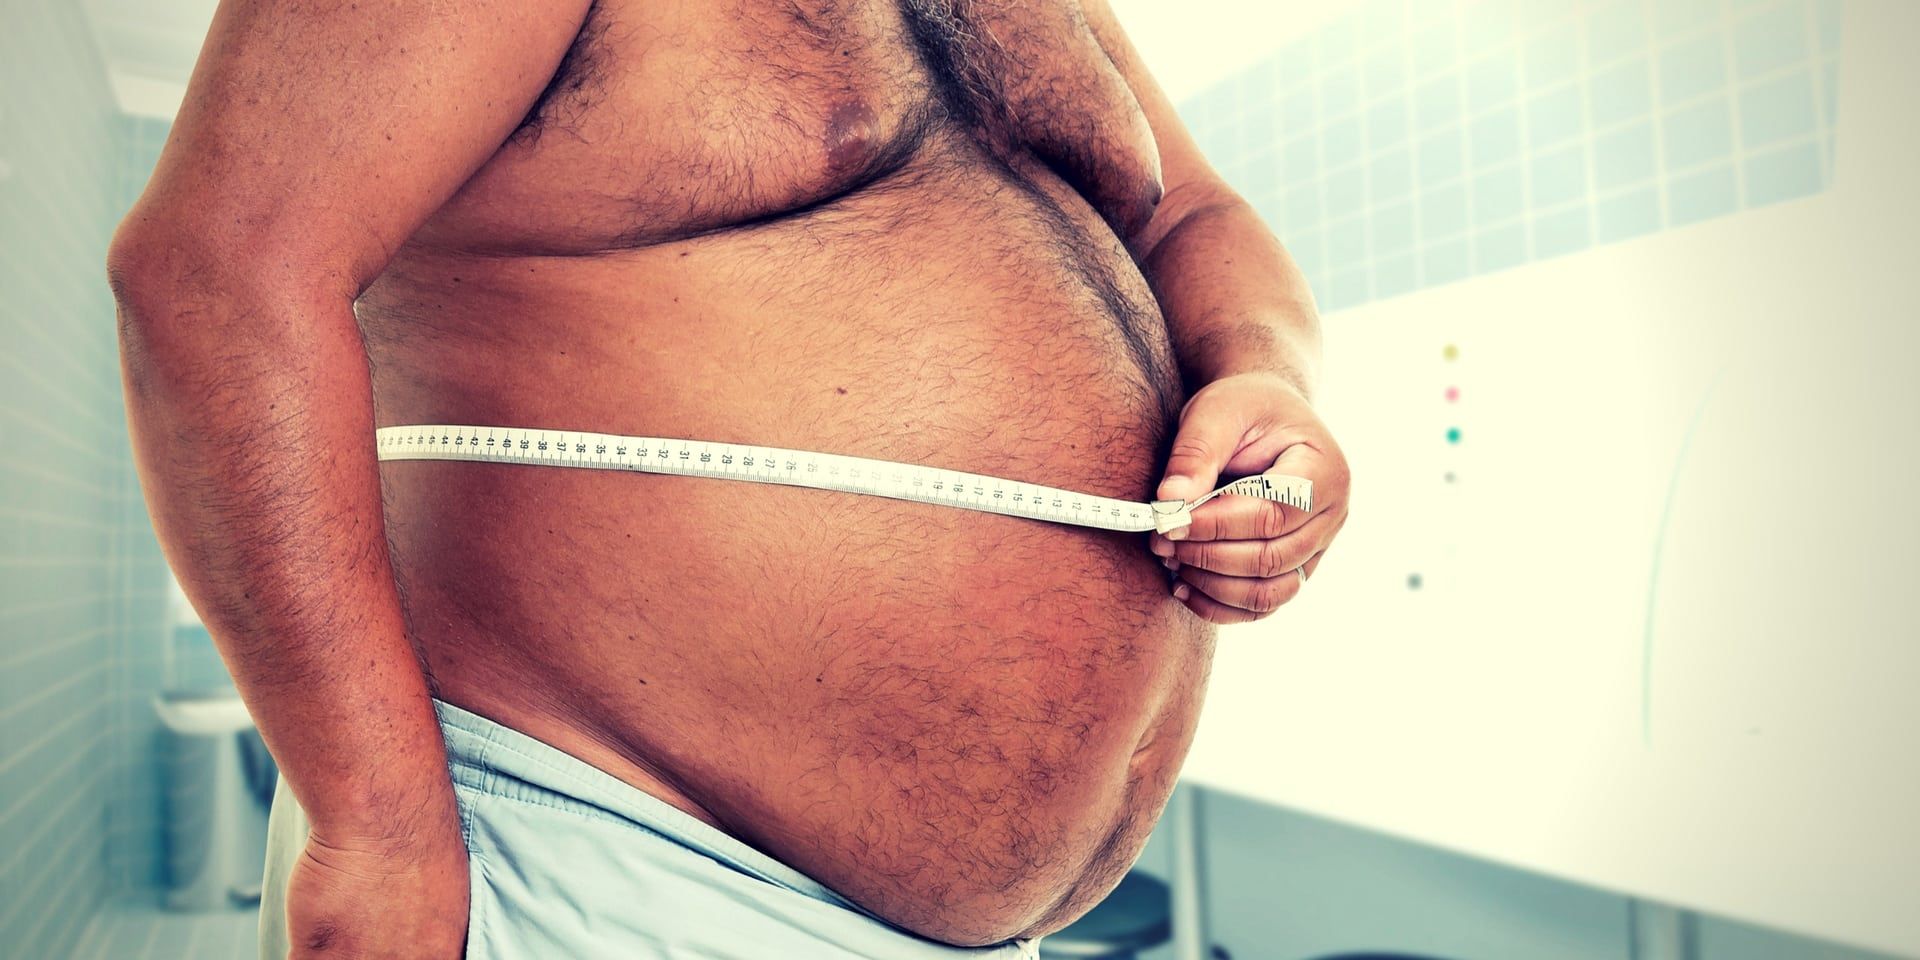 estrogen dominance (a man with a big fat belly)